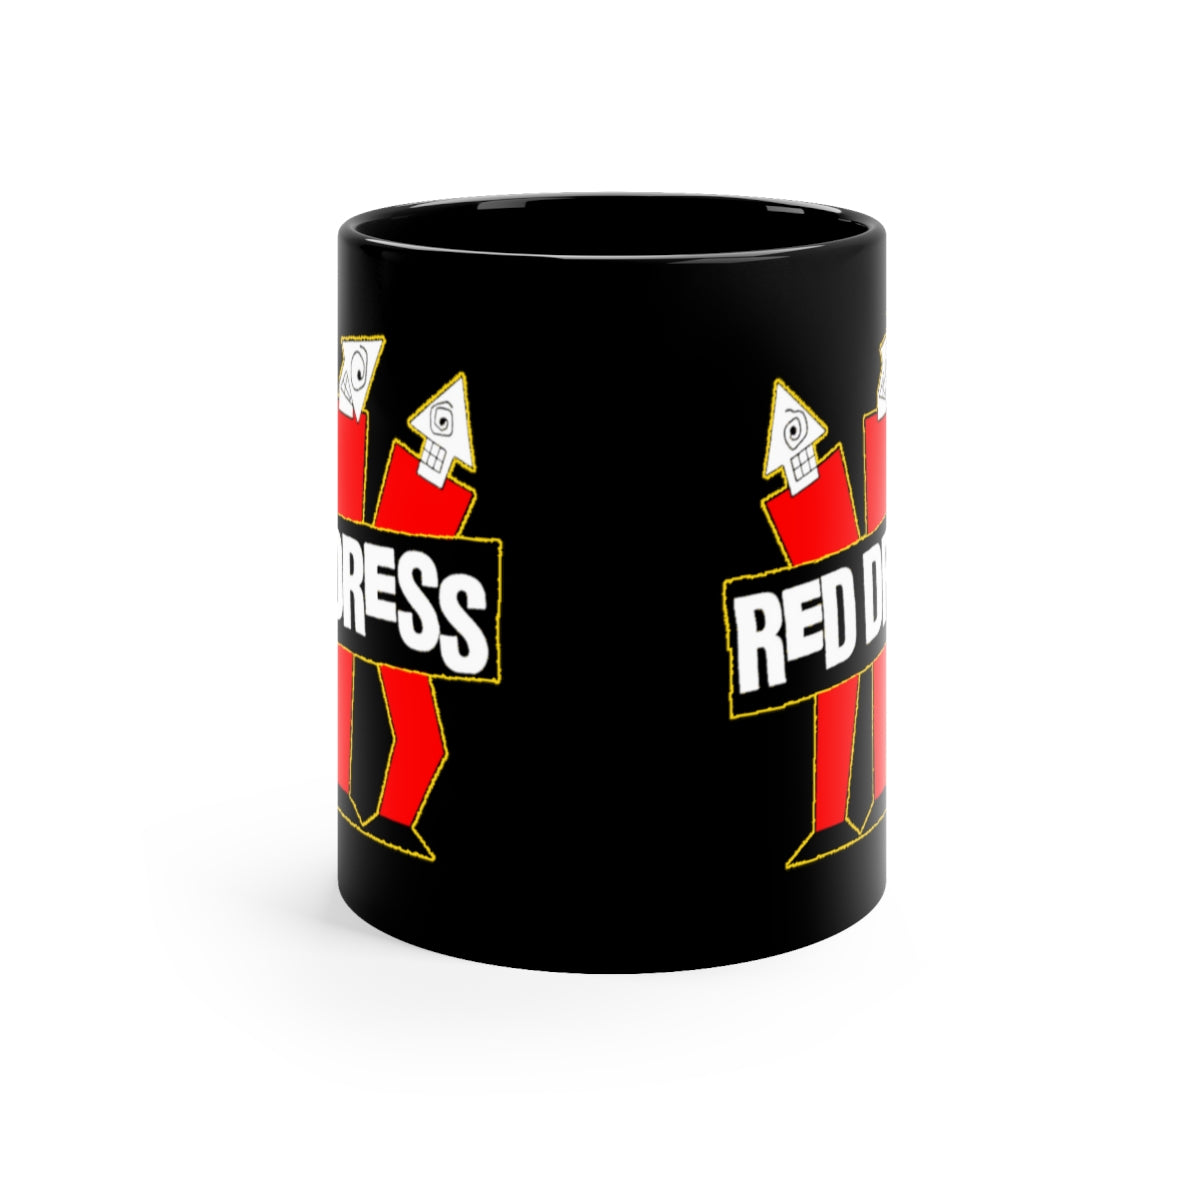 RED DRESS Black Ceramic Mug